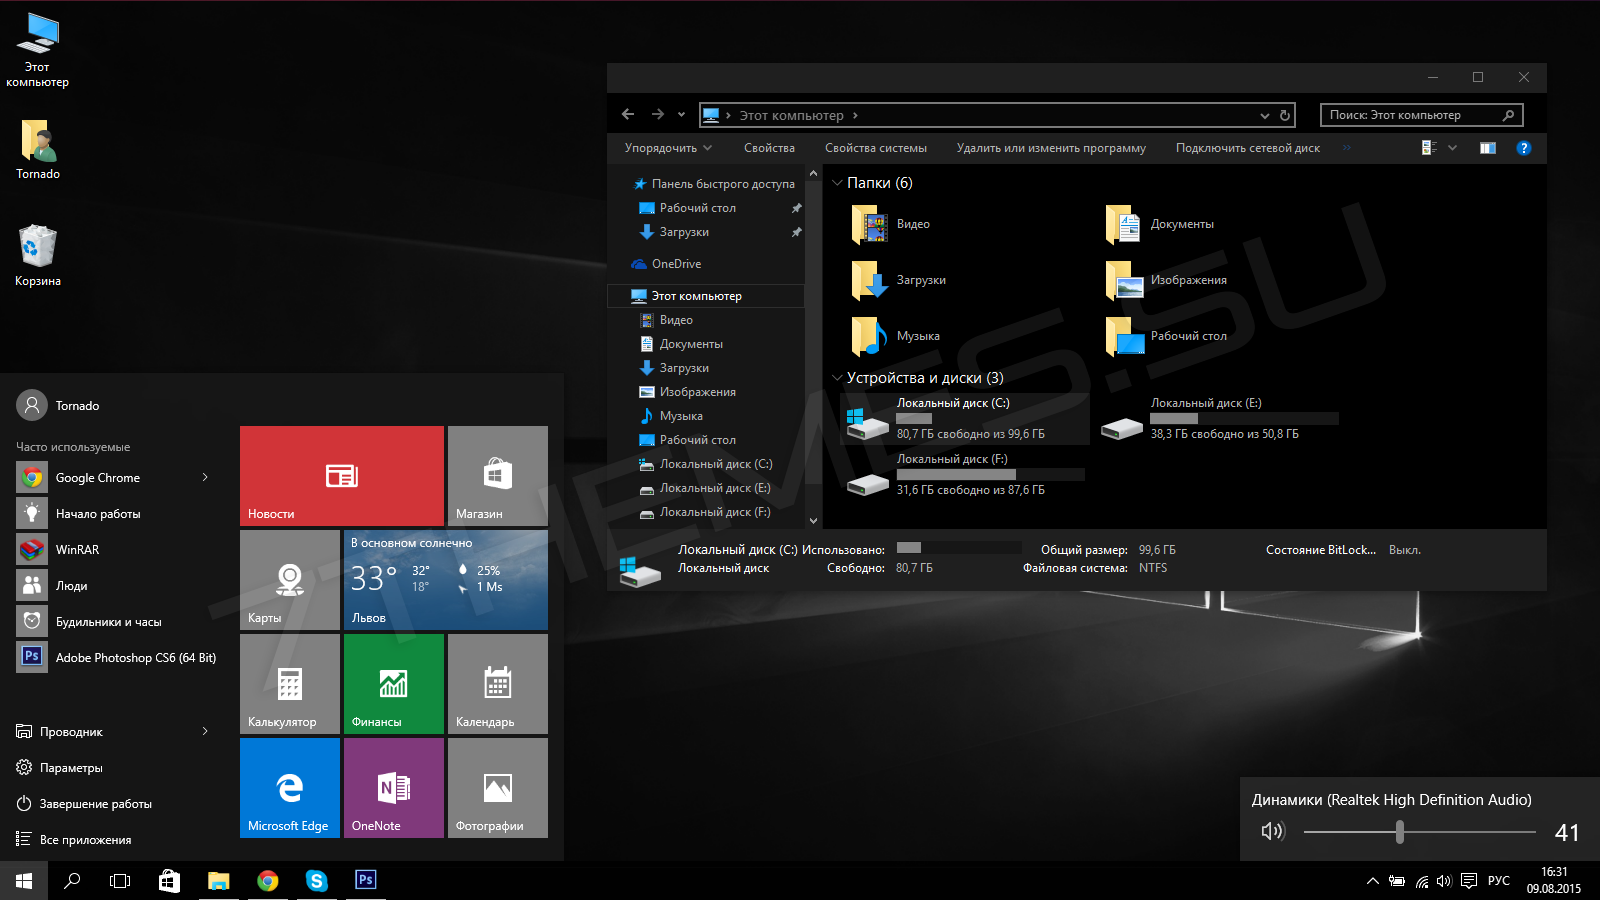 Windows 10 Black Edition for Windows 10 Anniversary Update